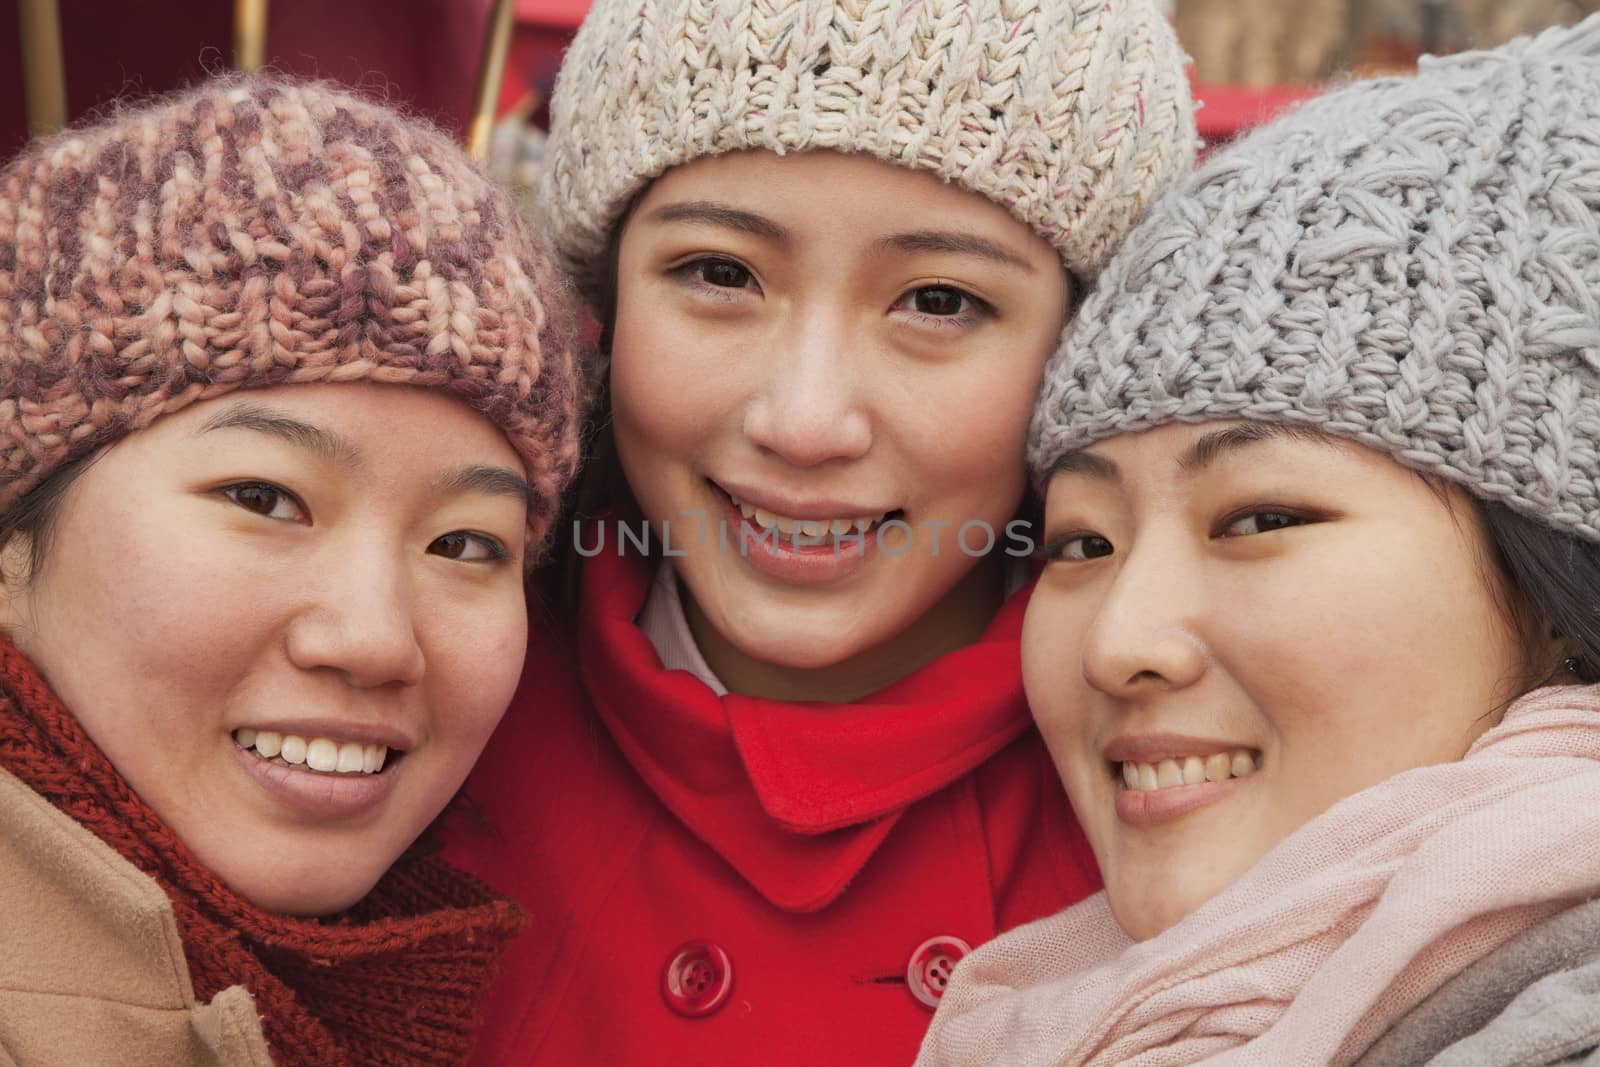 Portrait of three friends outdoors in winter, Beijing